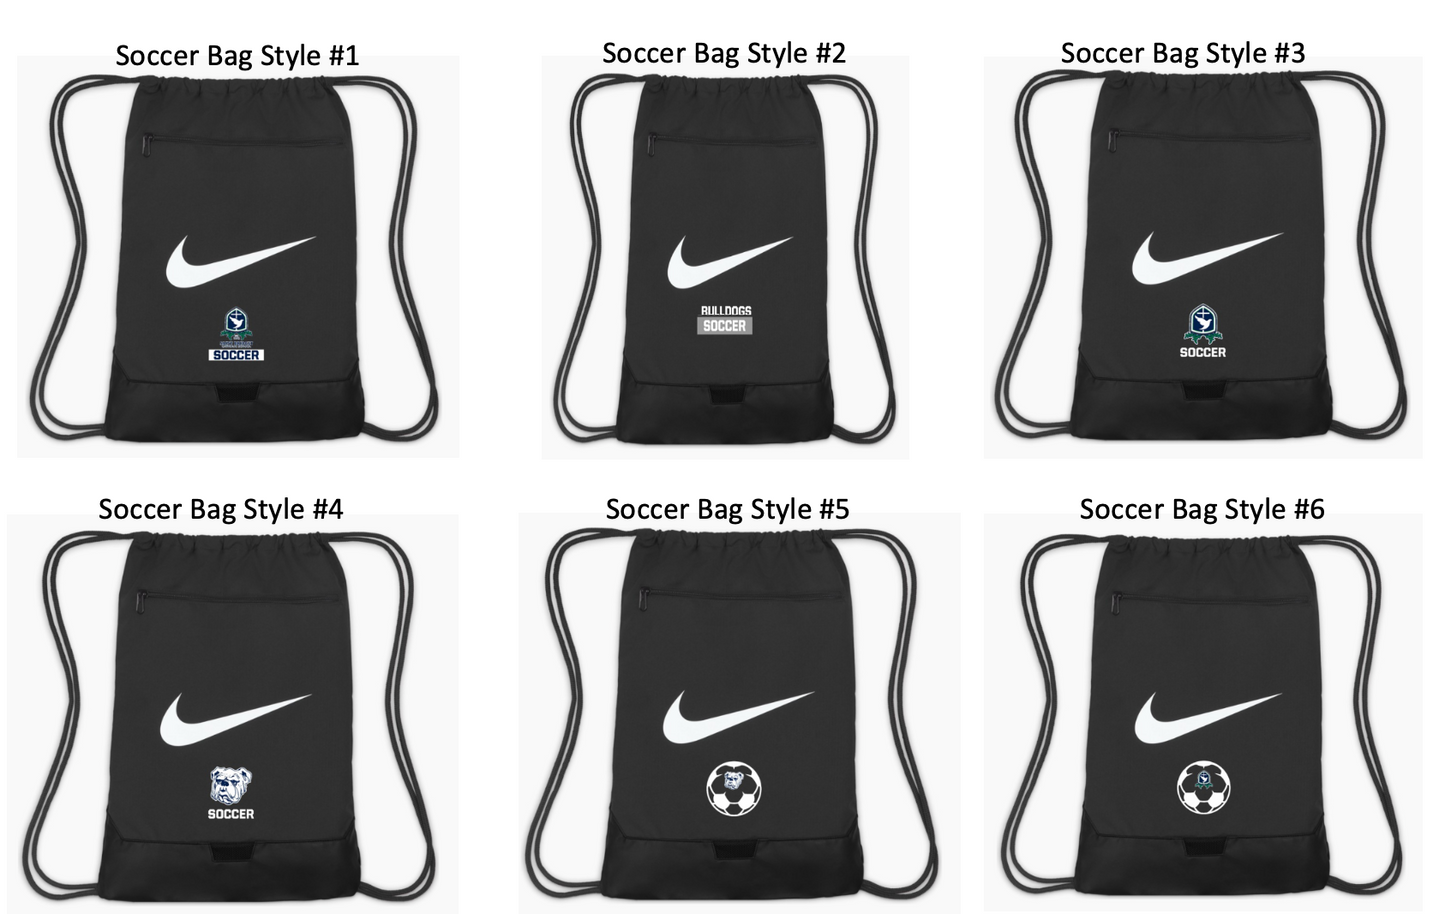 Saint Bridget Soccer - Nike Brasilia 9.5 Drawstring Bag